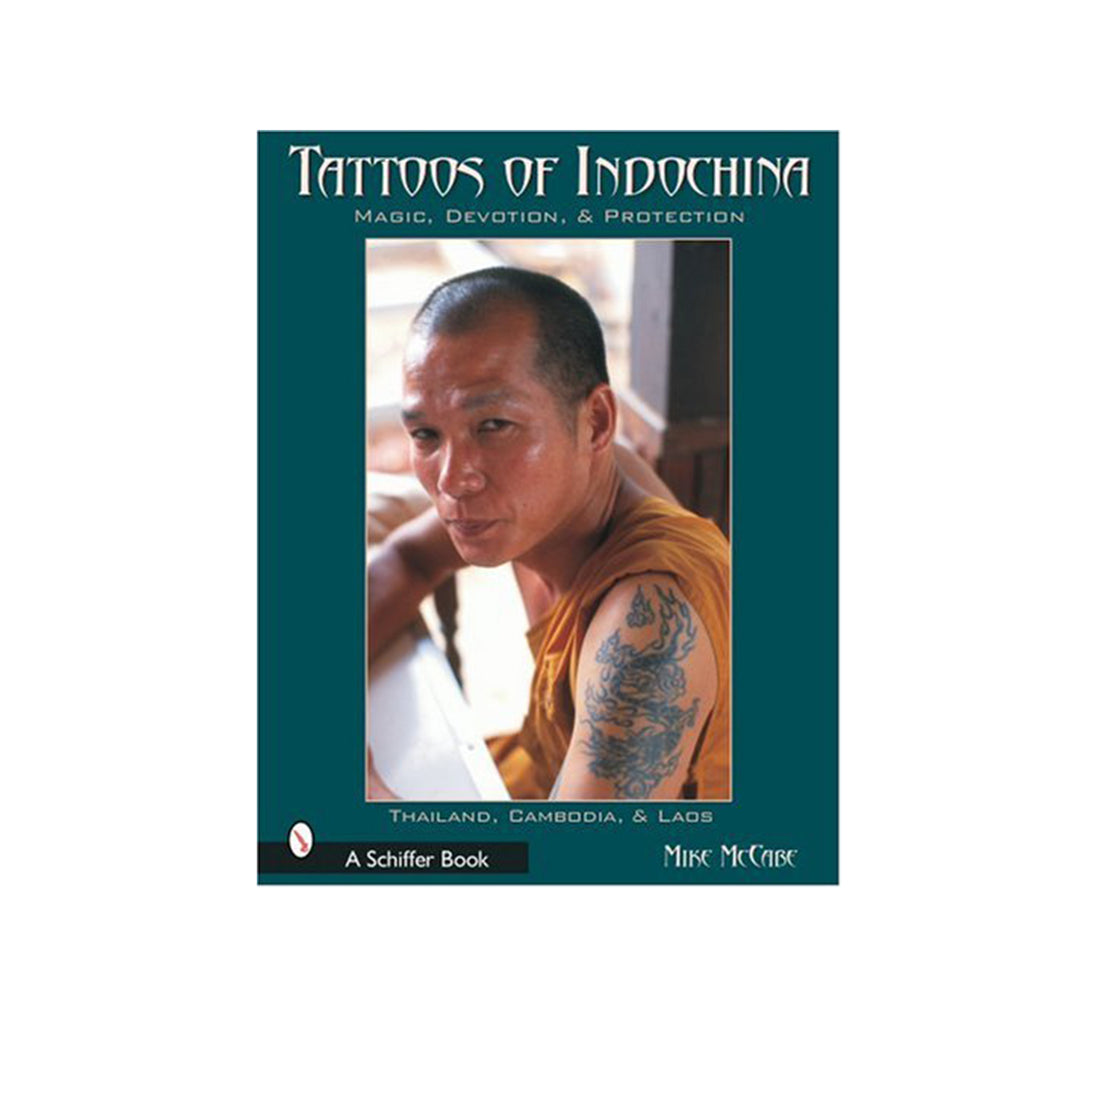 Tattoos of Indochina